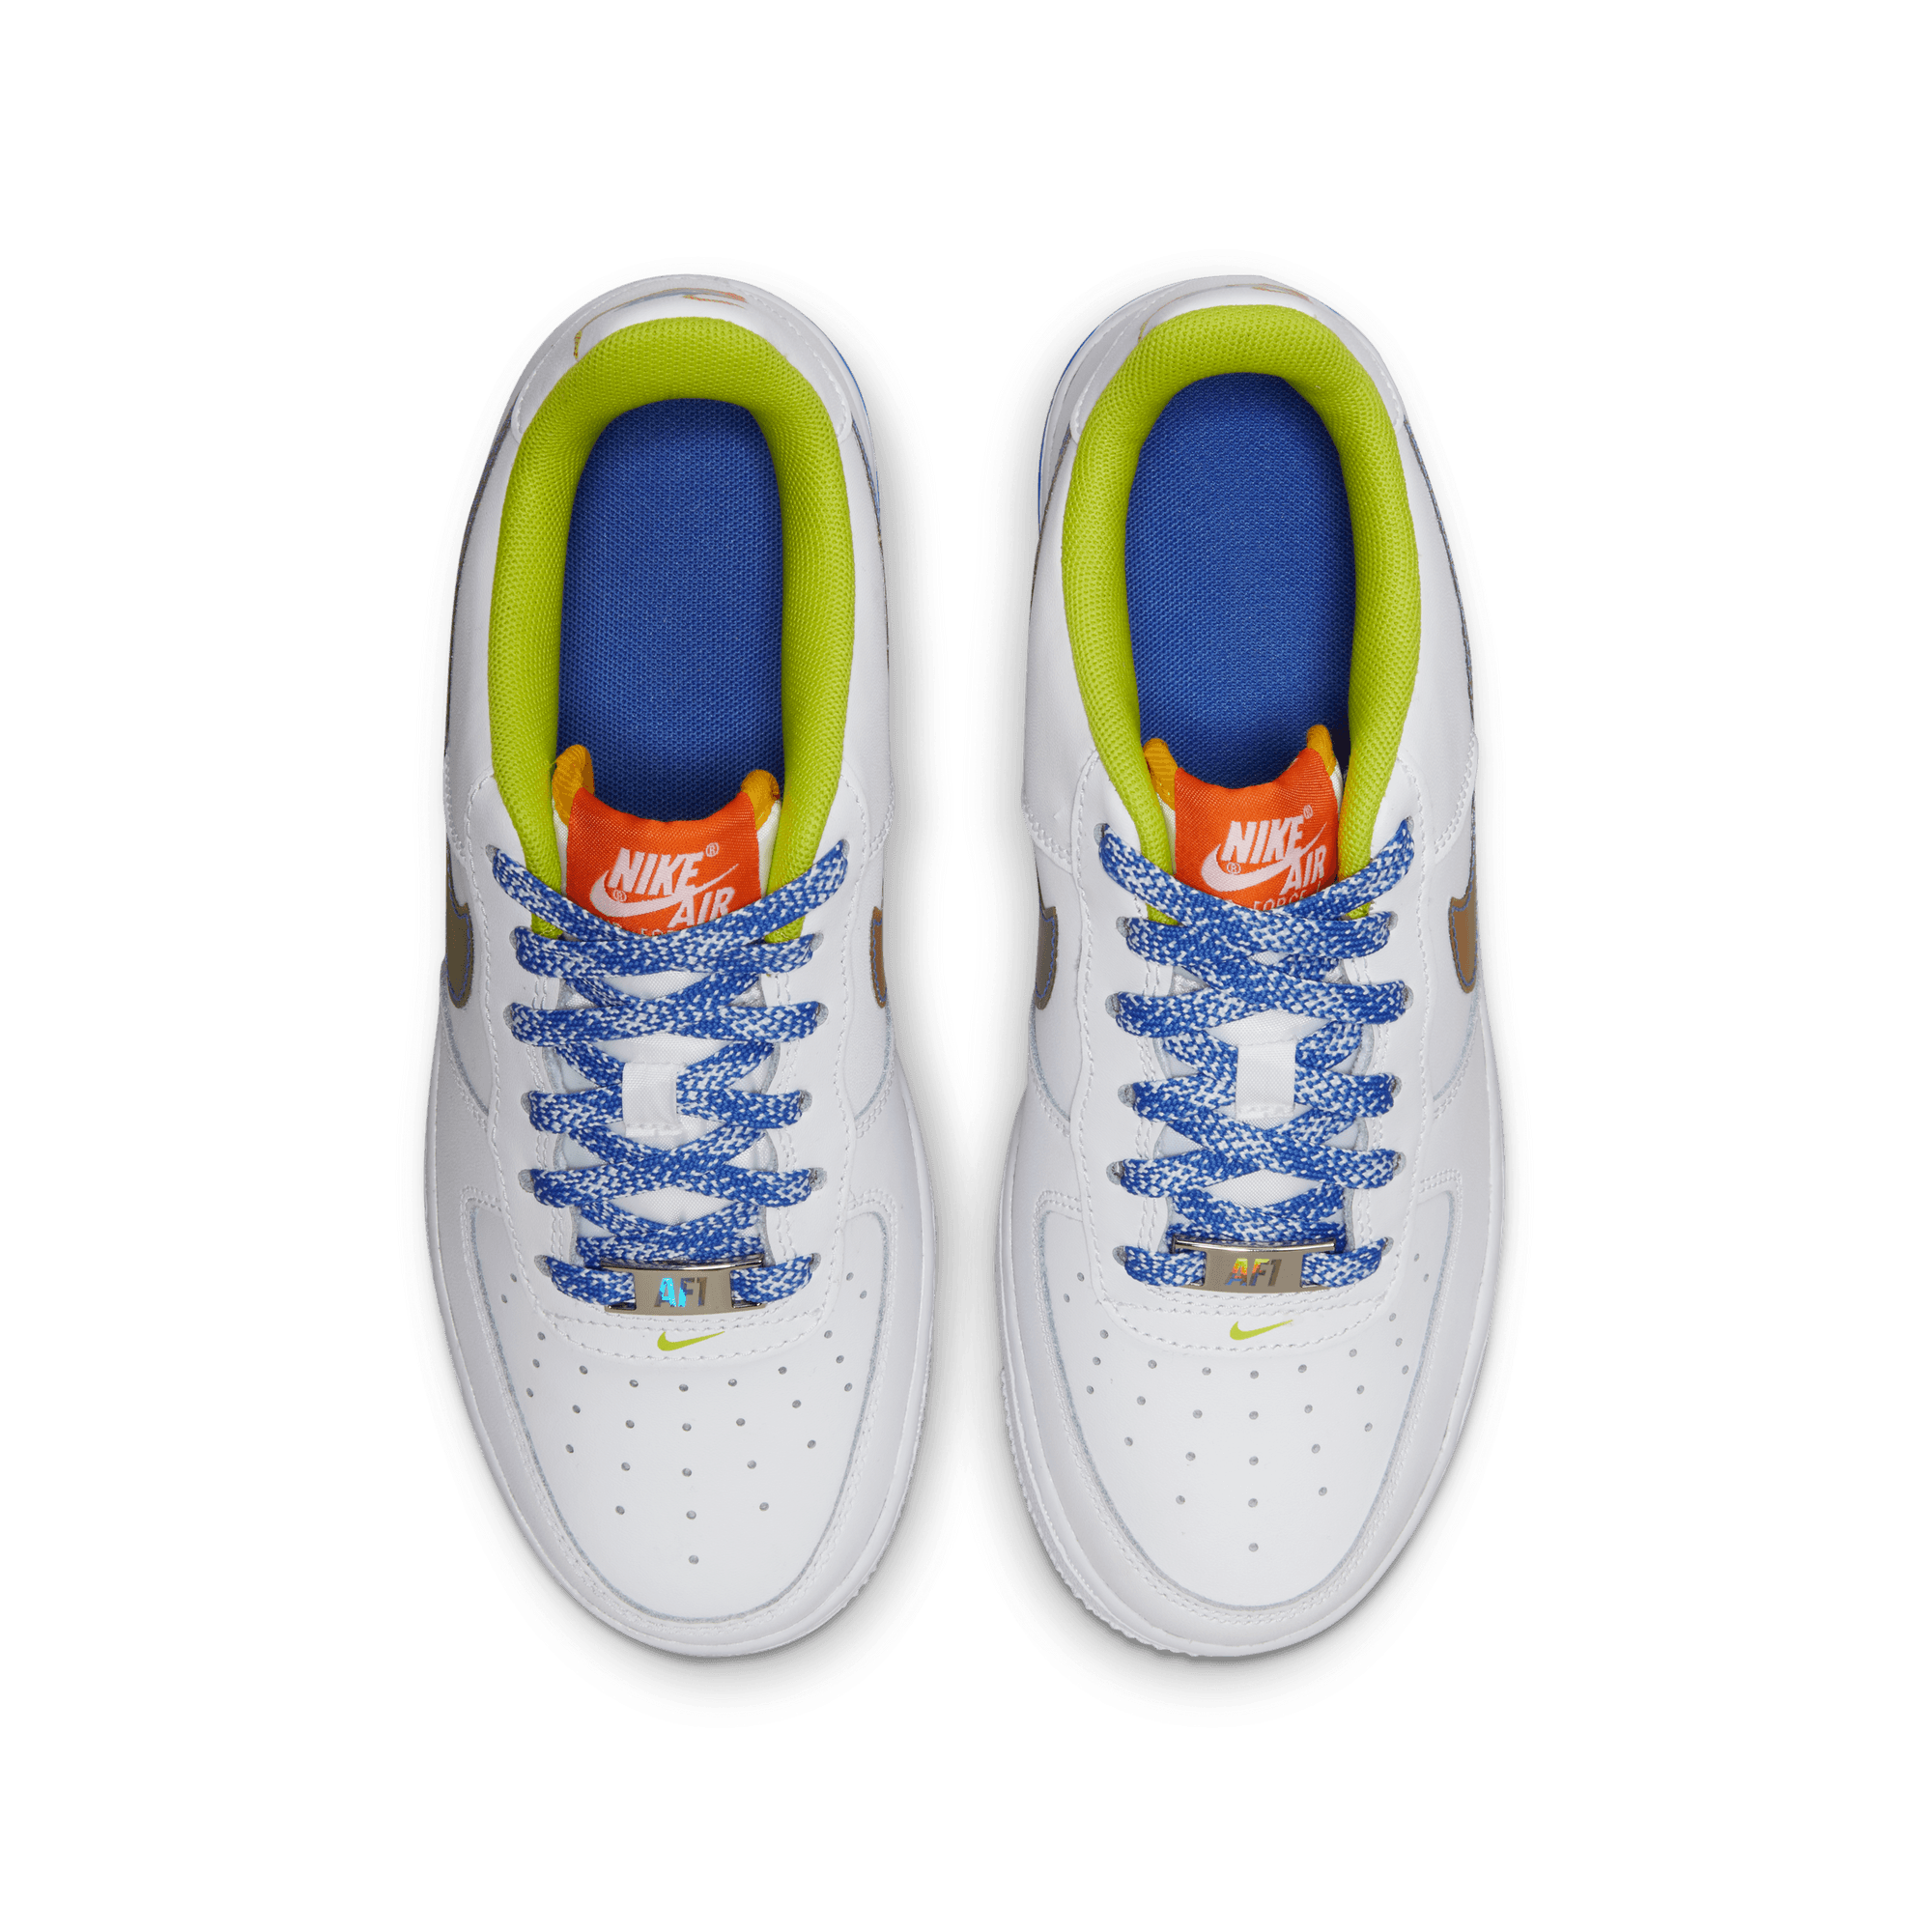 Nike Kids' Grade School Air Force 1 LV8 Shoes